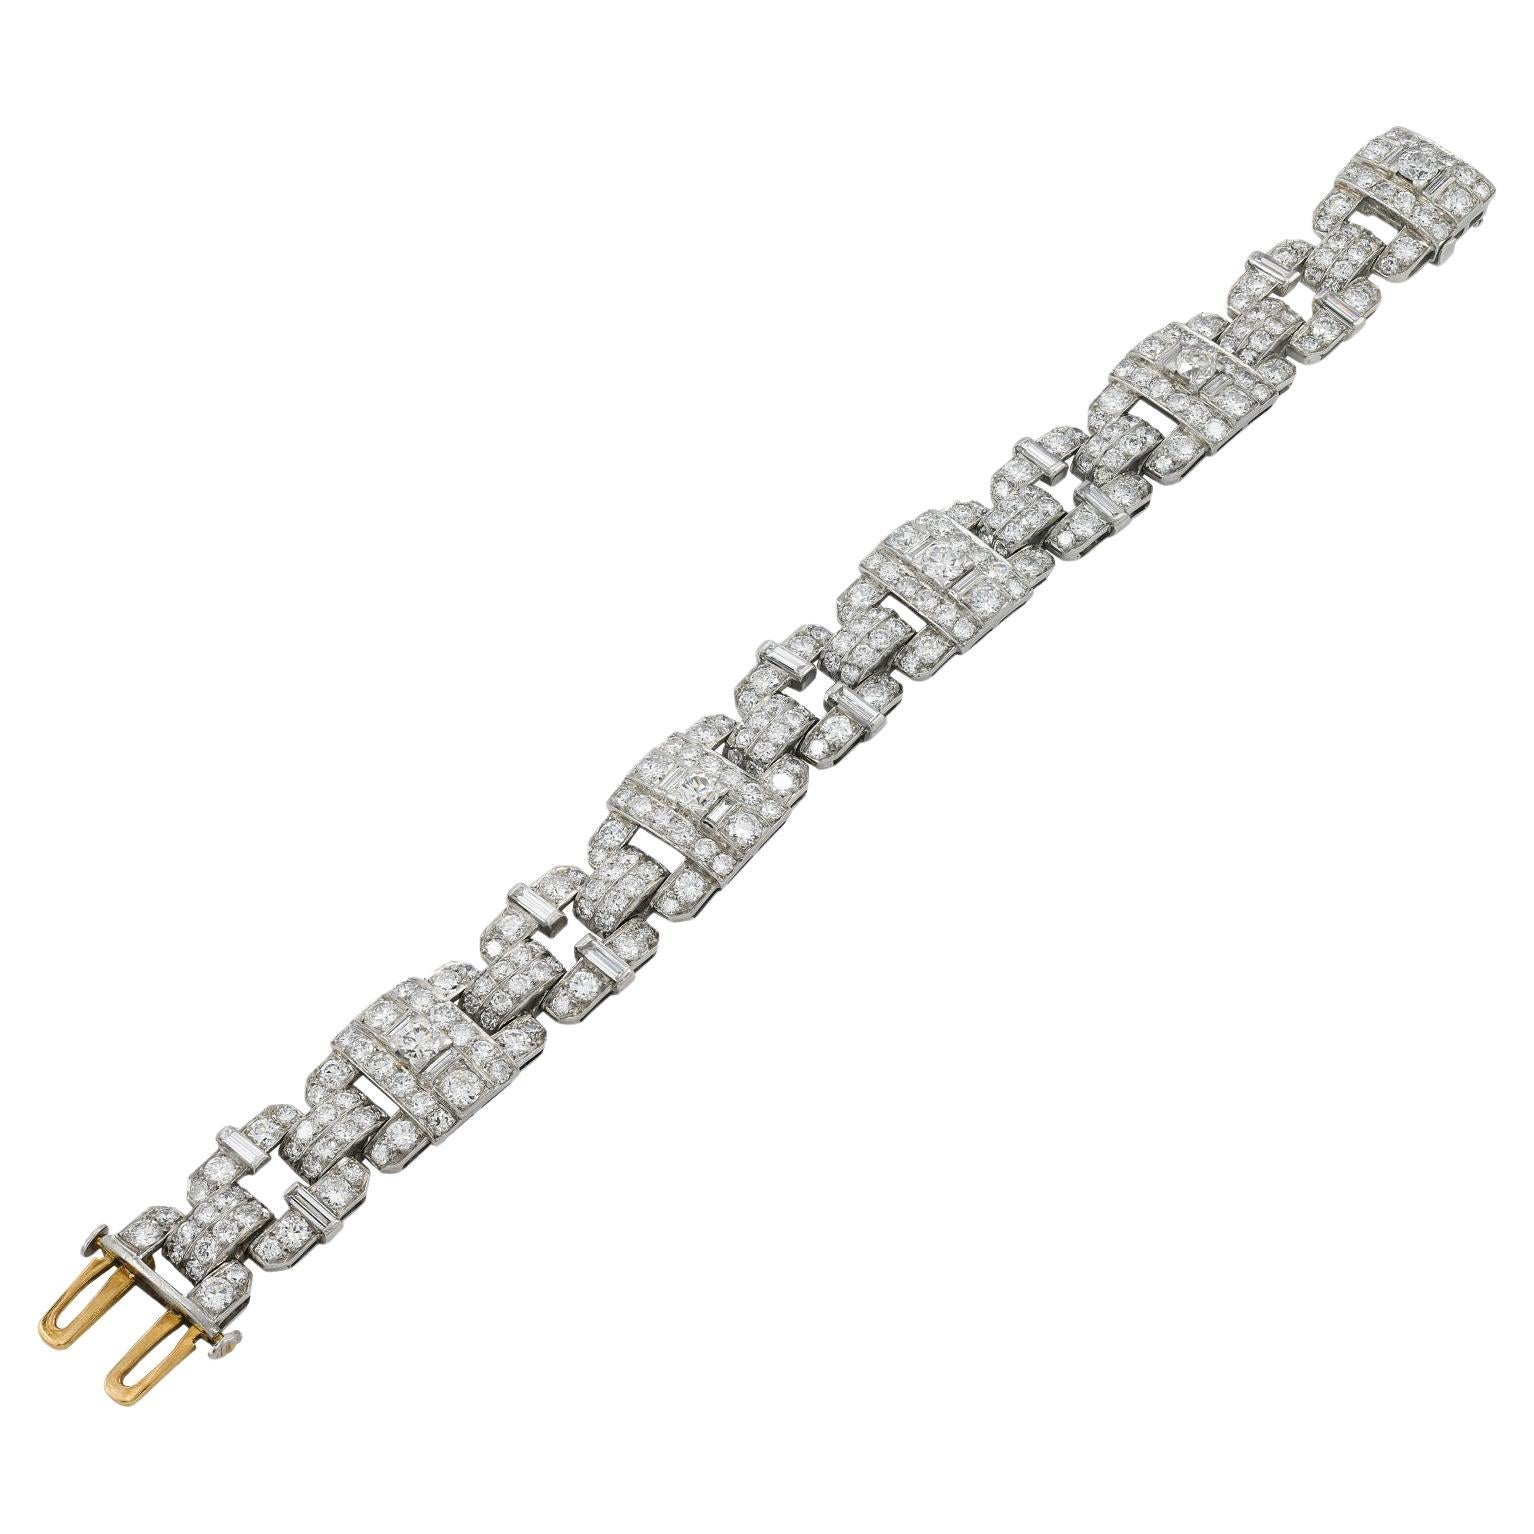  Tiffany & Co. Art Deco Platinum Diamond Bracelet